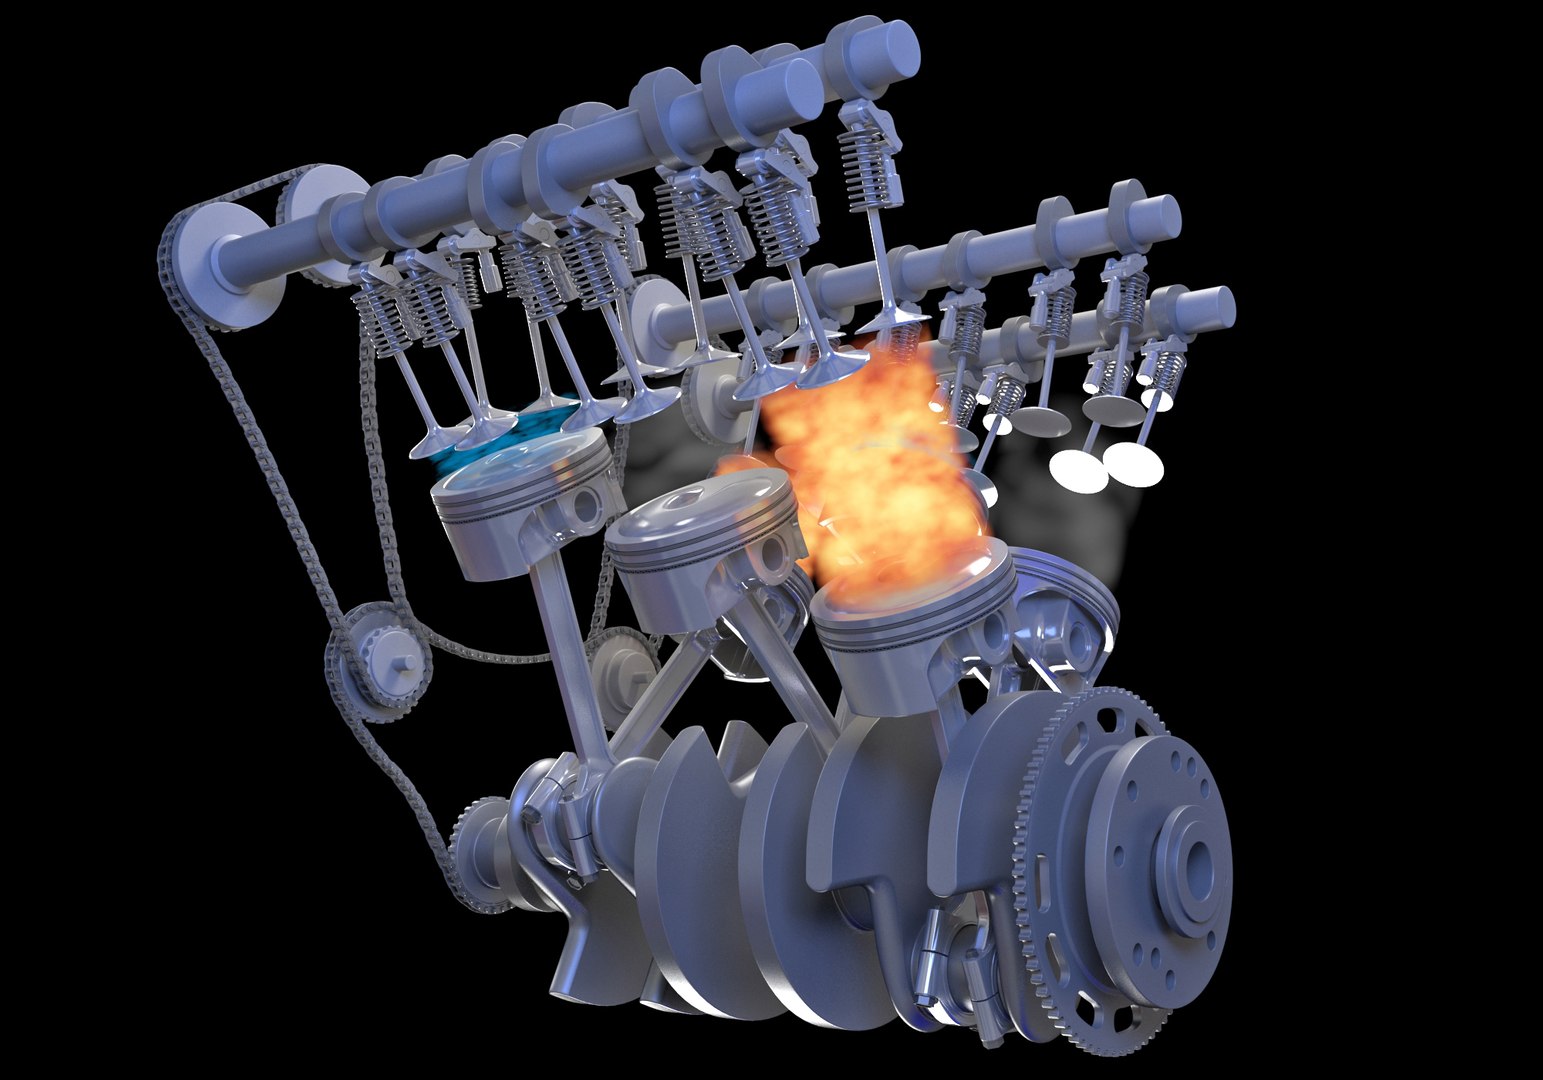 v6 engine animation